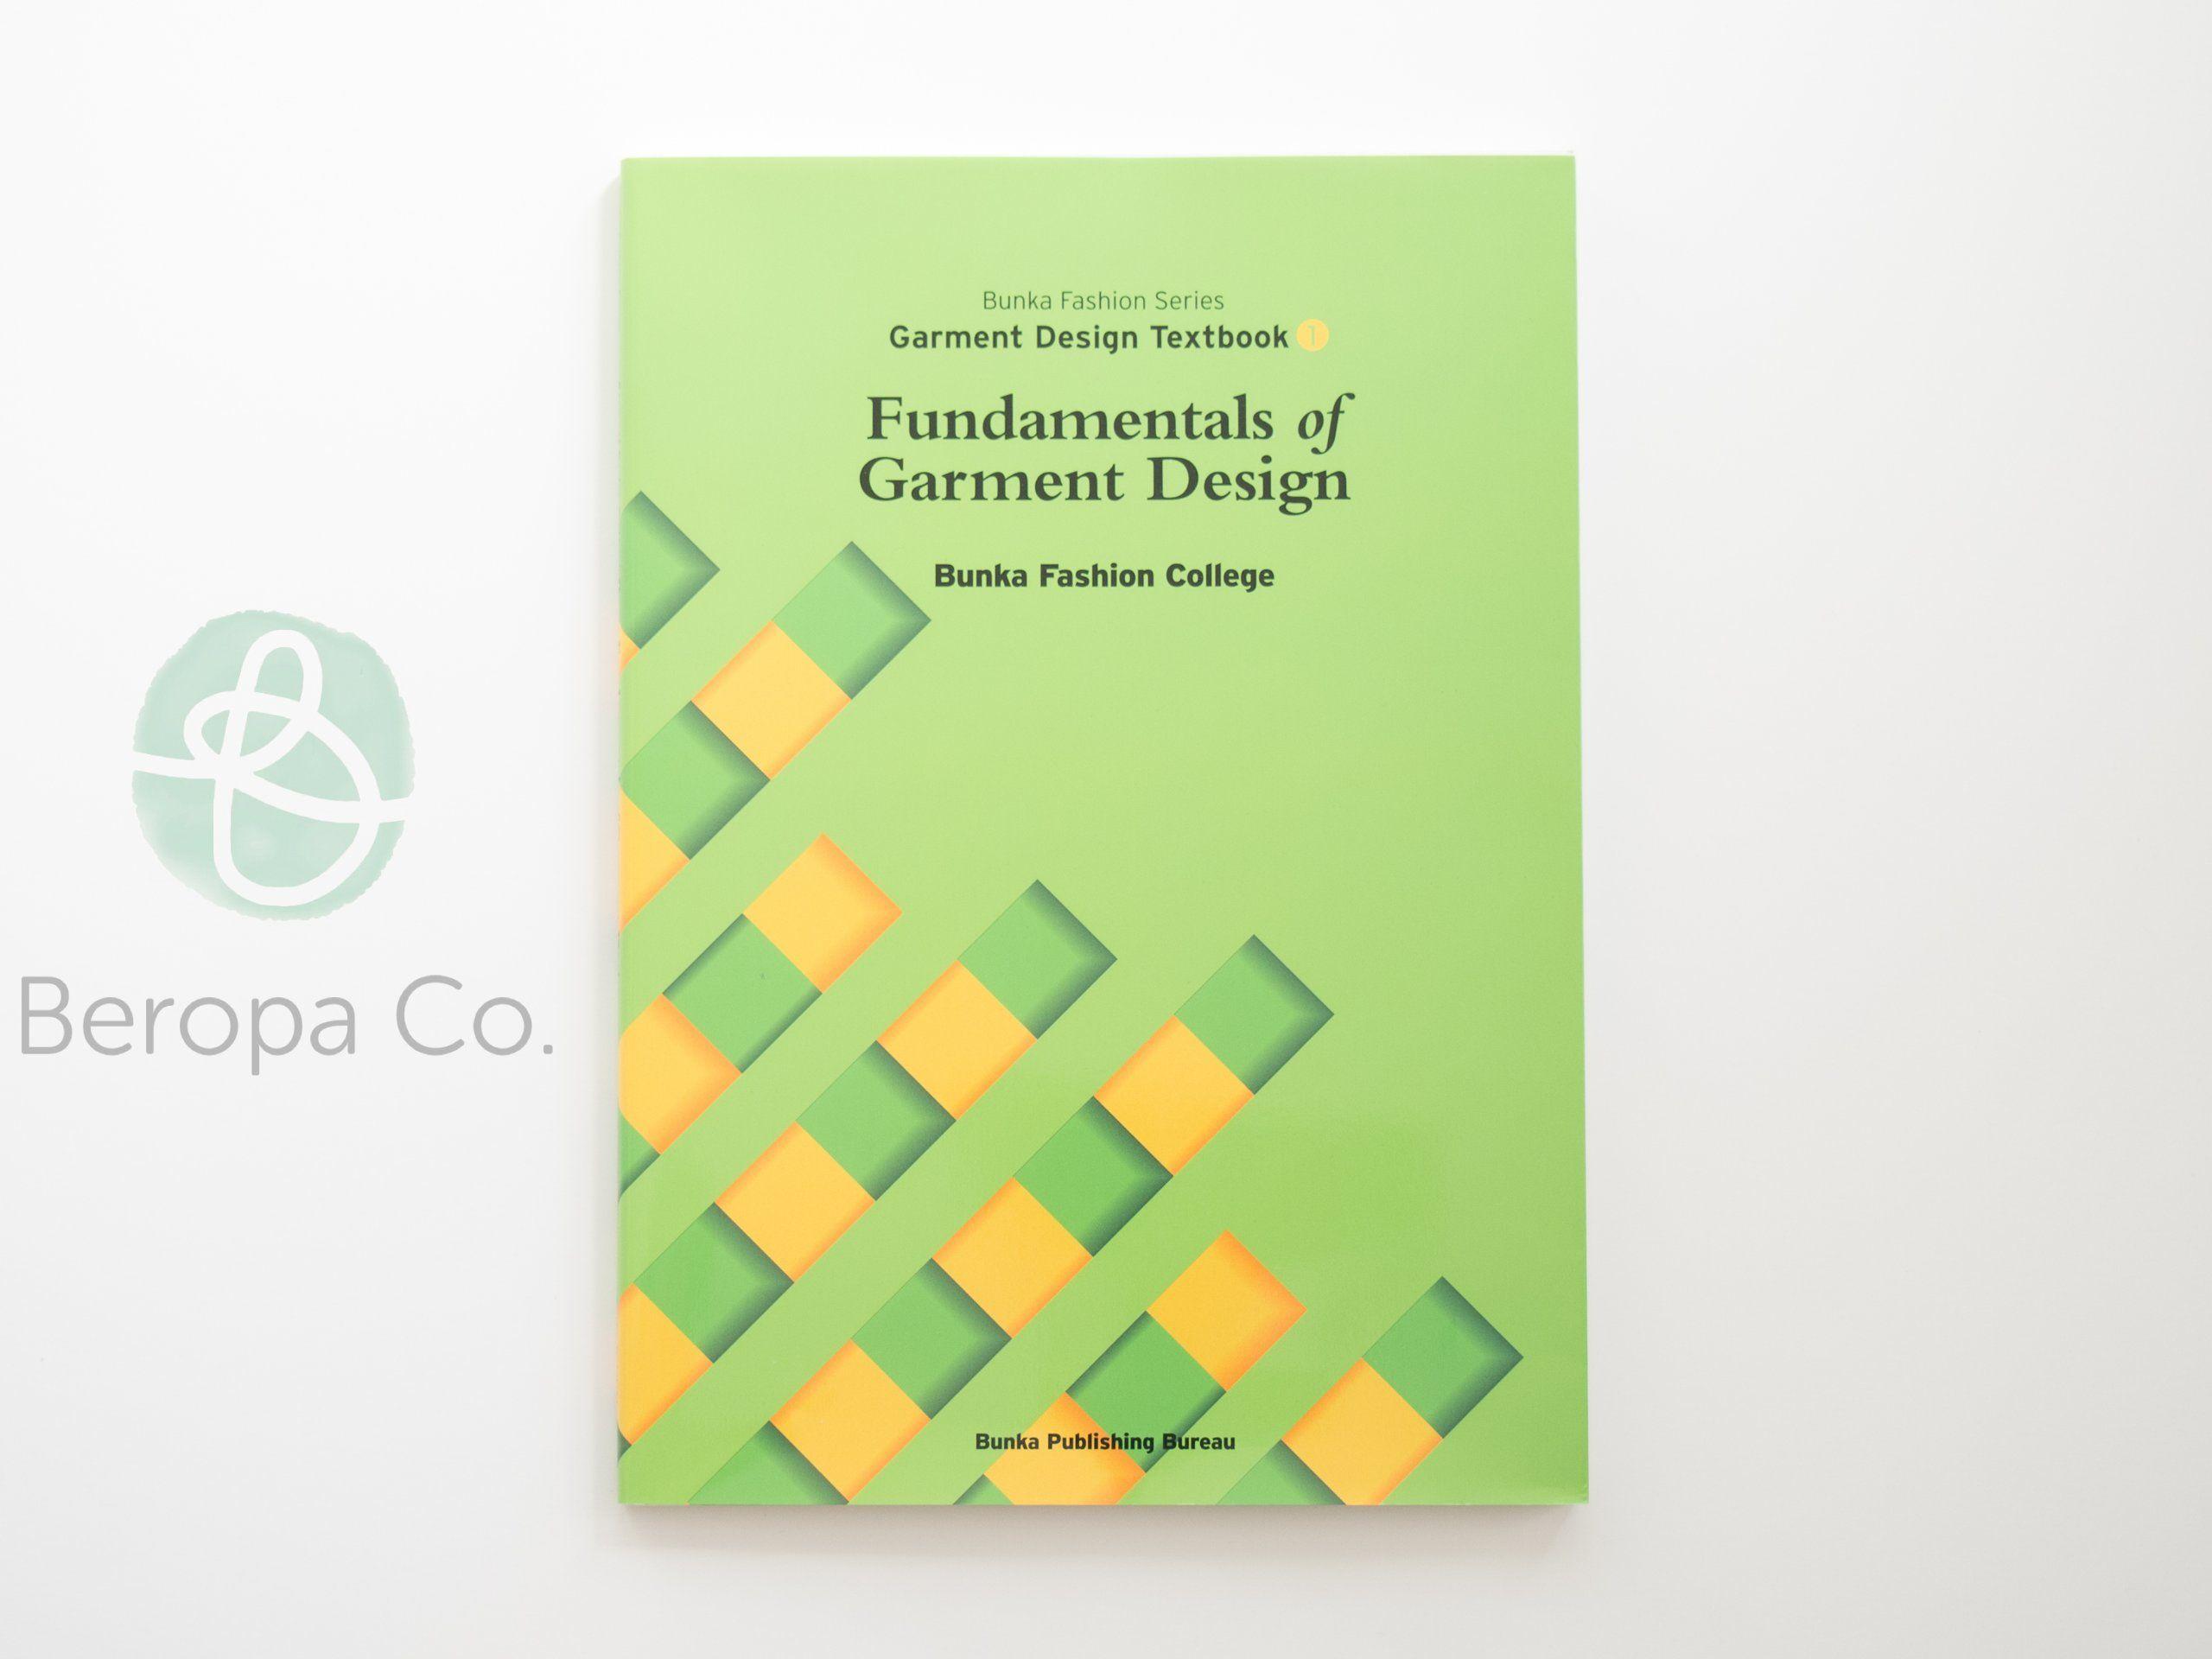 Fashion Ref Logo - Bunka Fashion Series Garment Design Textbook 1 - Fundamentals of ...